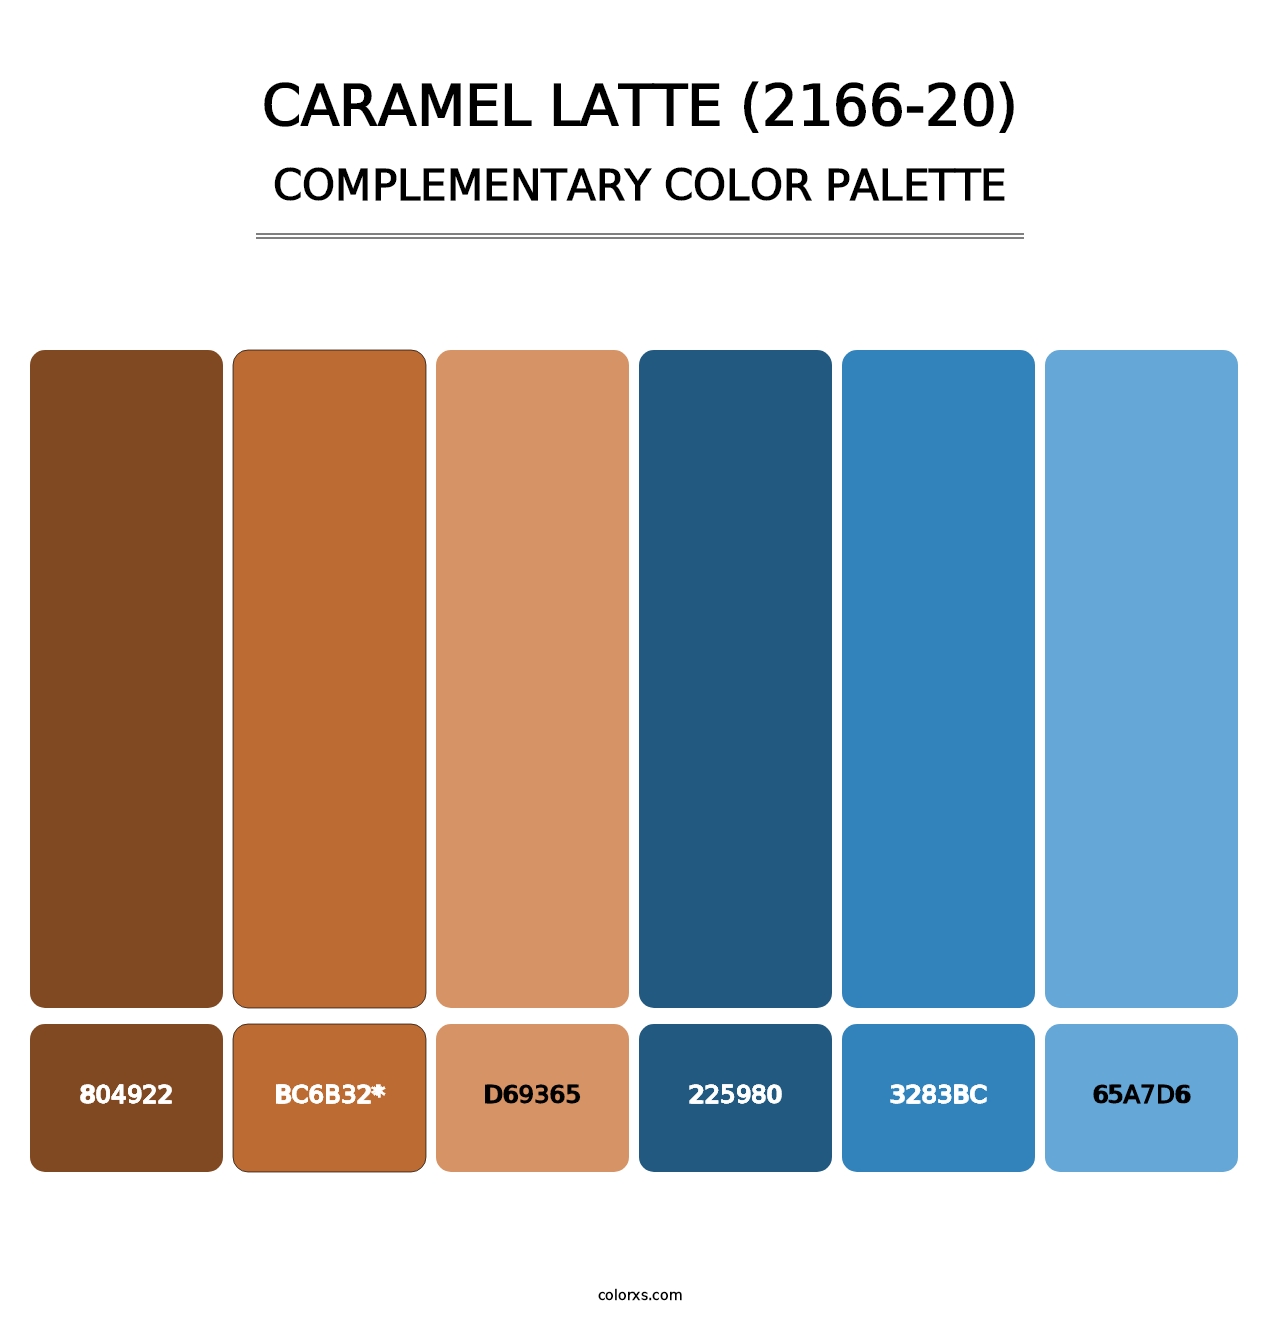 Caramel Latte (2166-20) - Complementary Color Palette